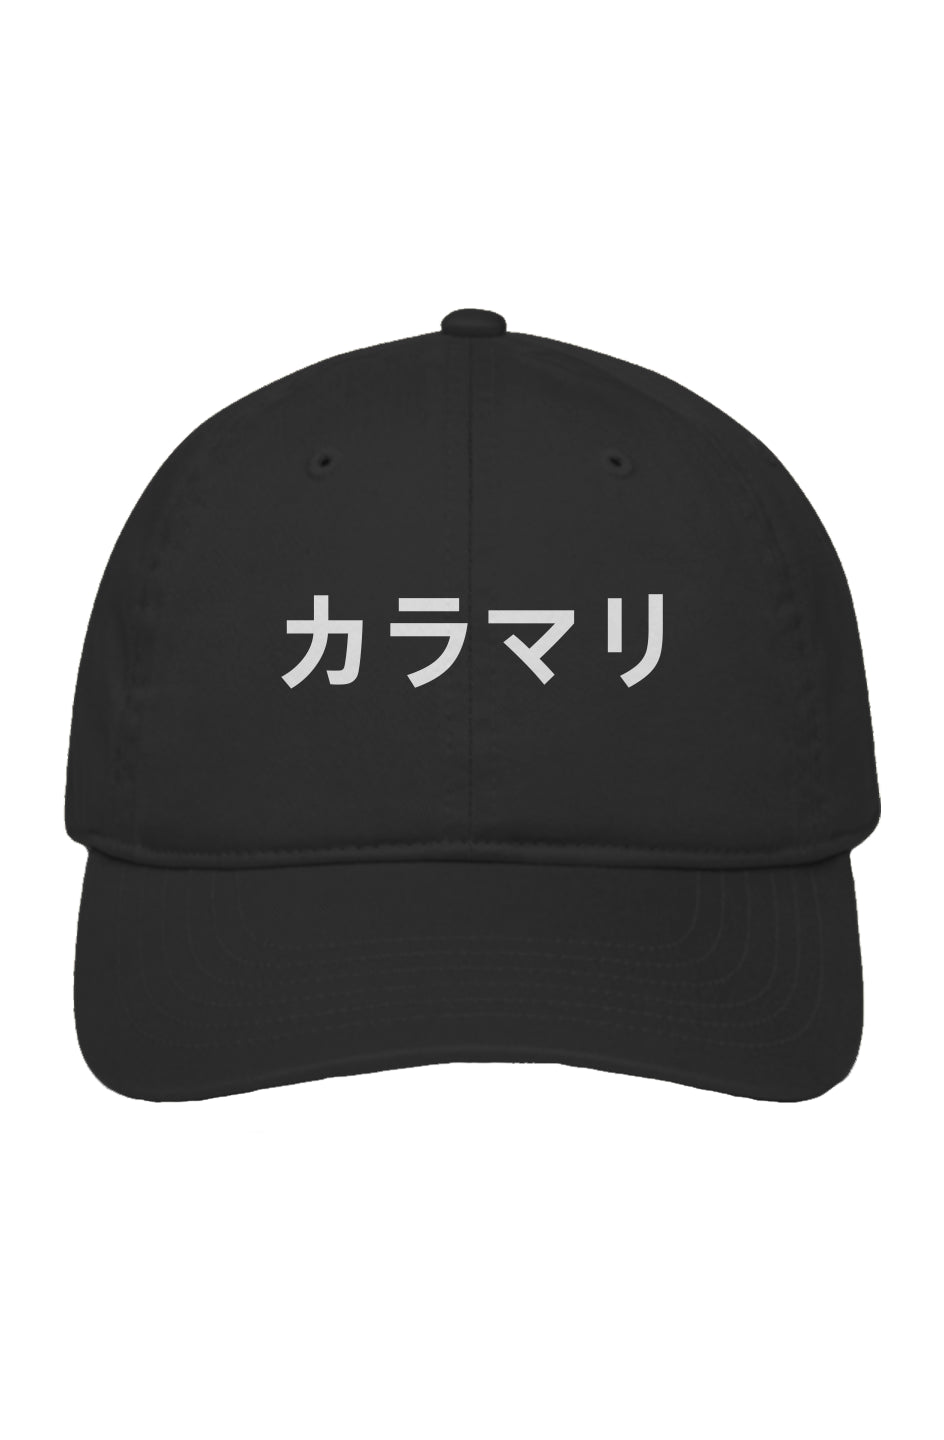 CHS KARAMARI Embroidered Baseball Cap [Black]